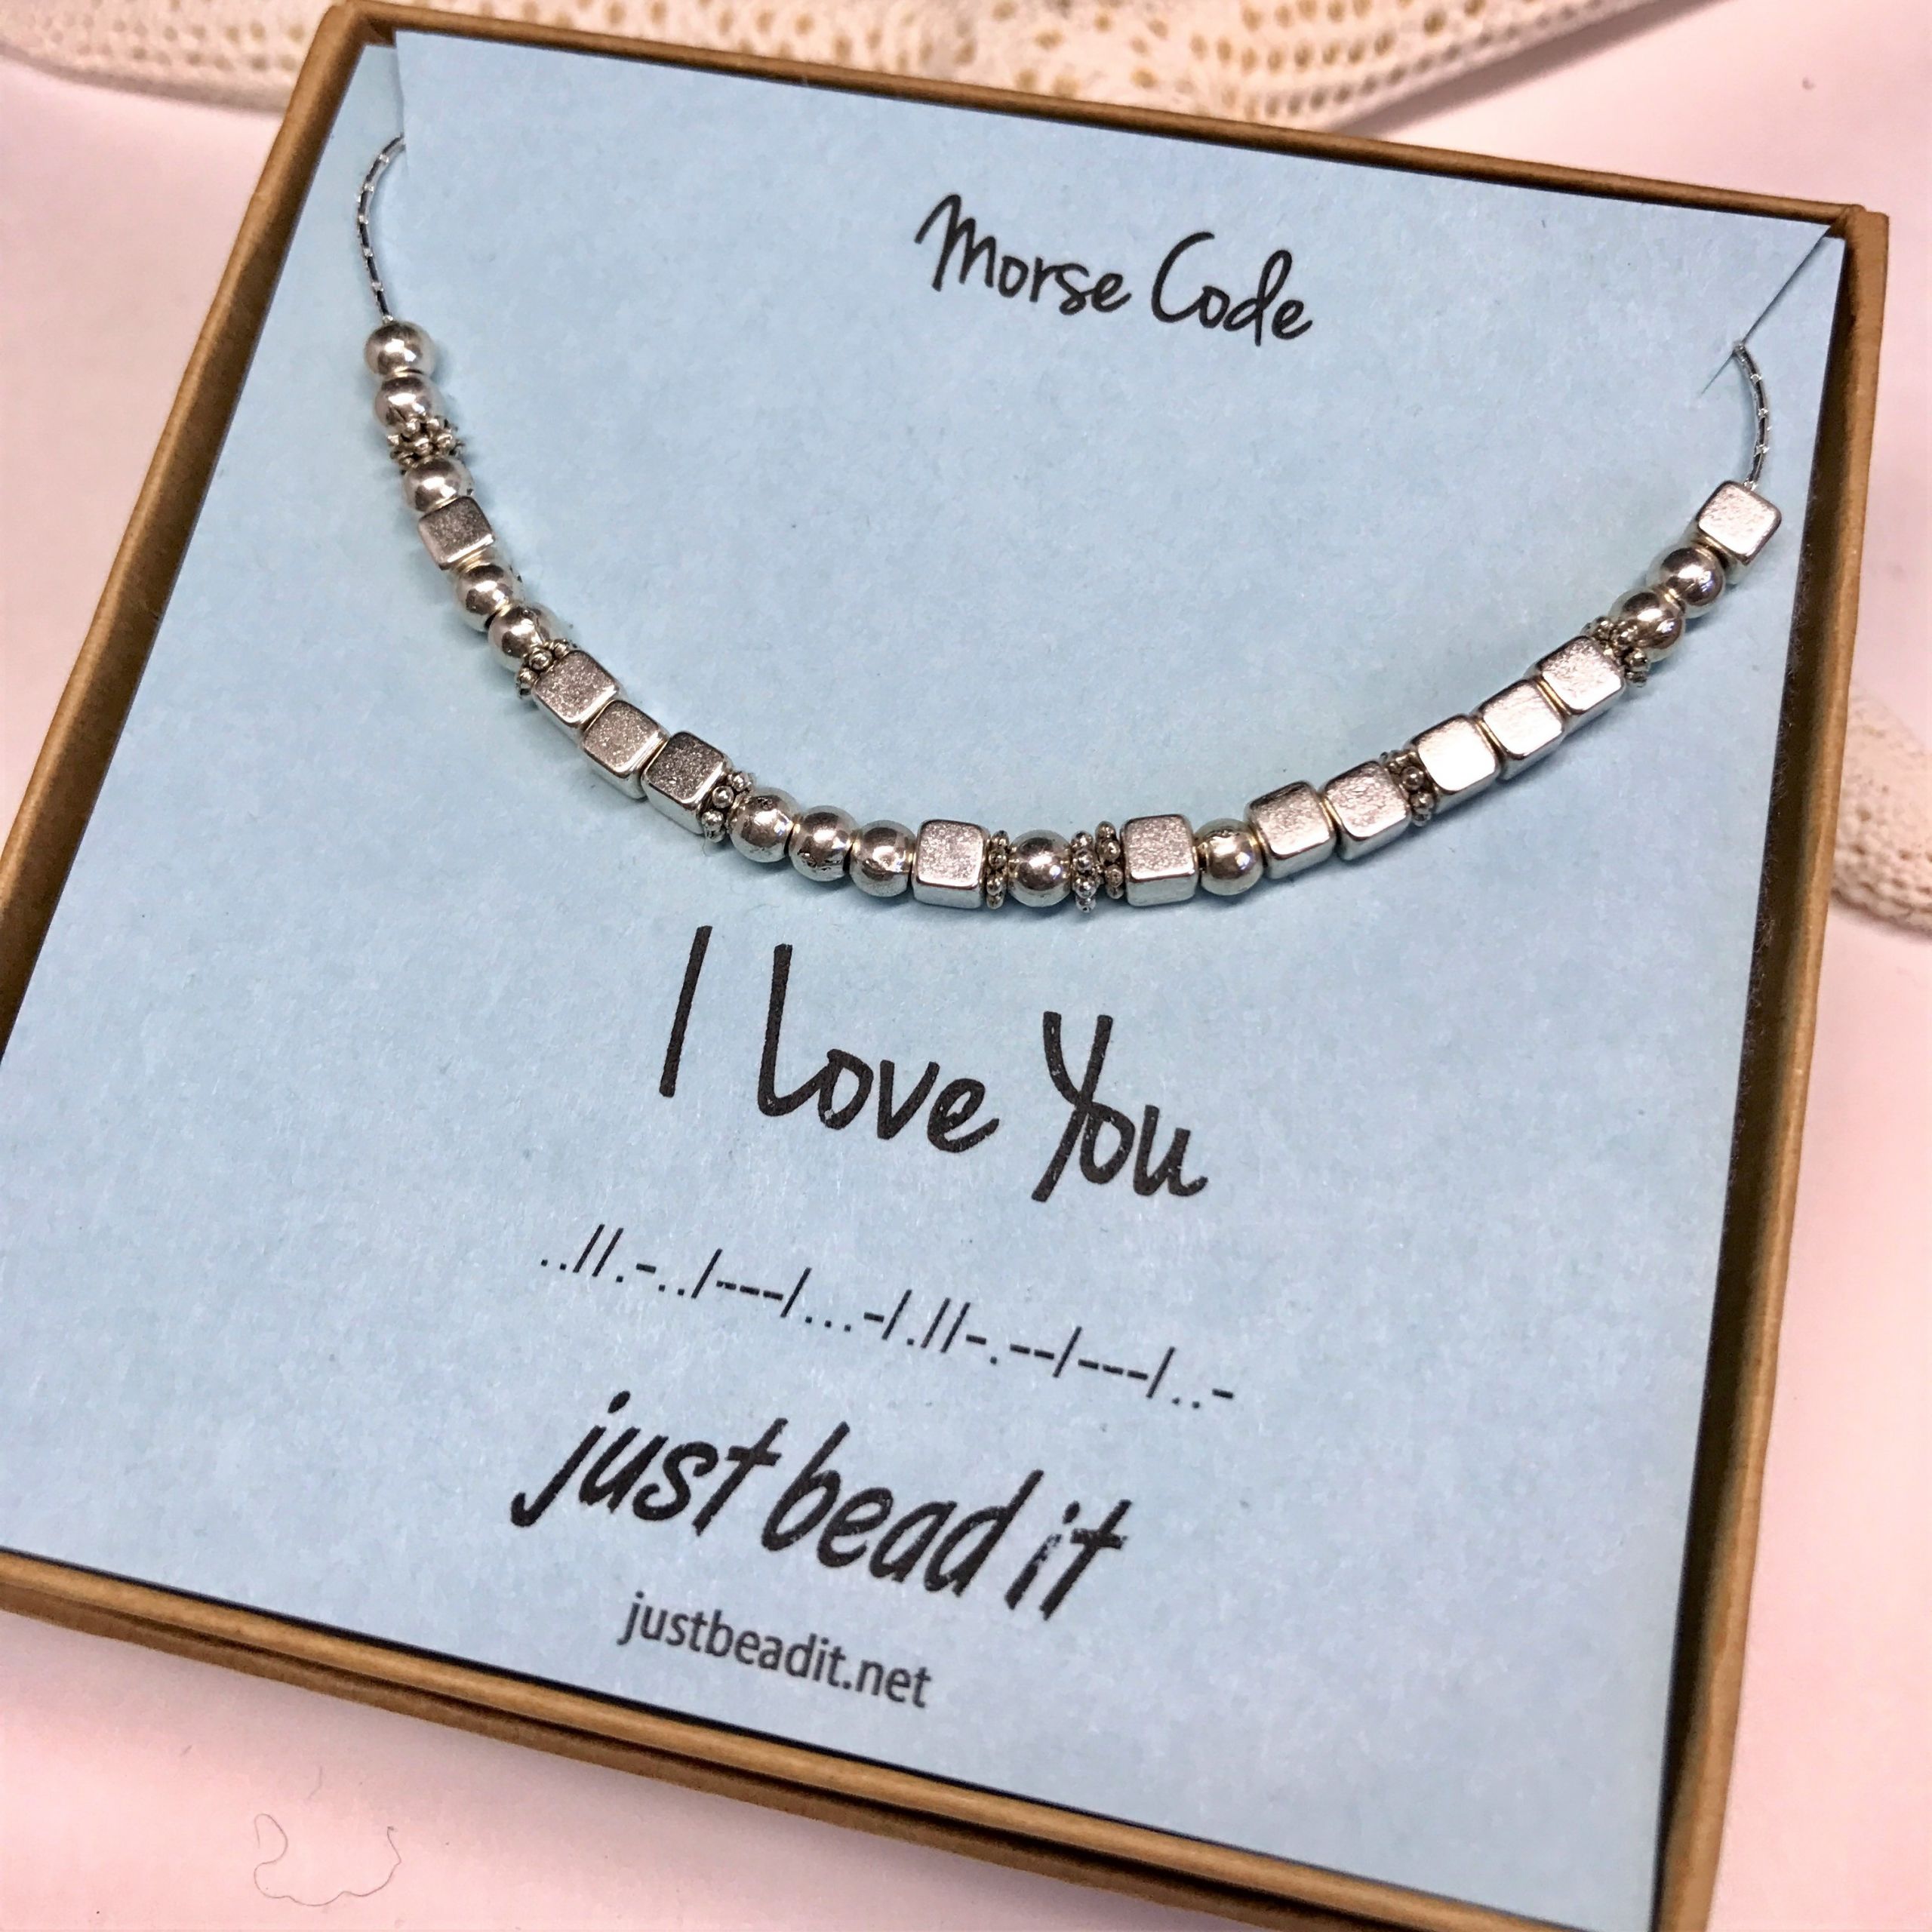 Morse Code Love Necklace
 I Love You Morse Code Silver Necklace – I Love You